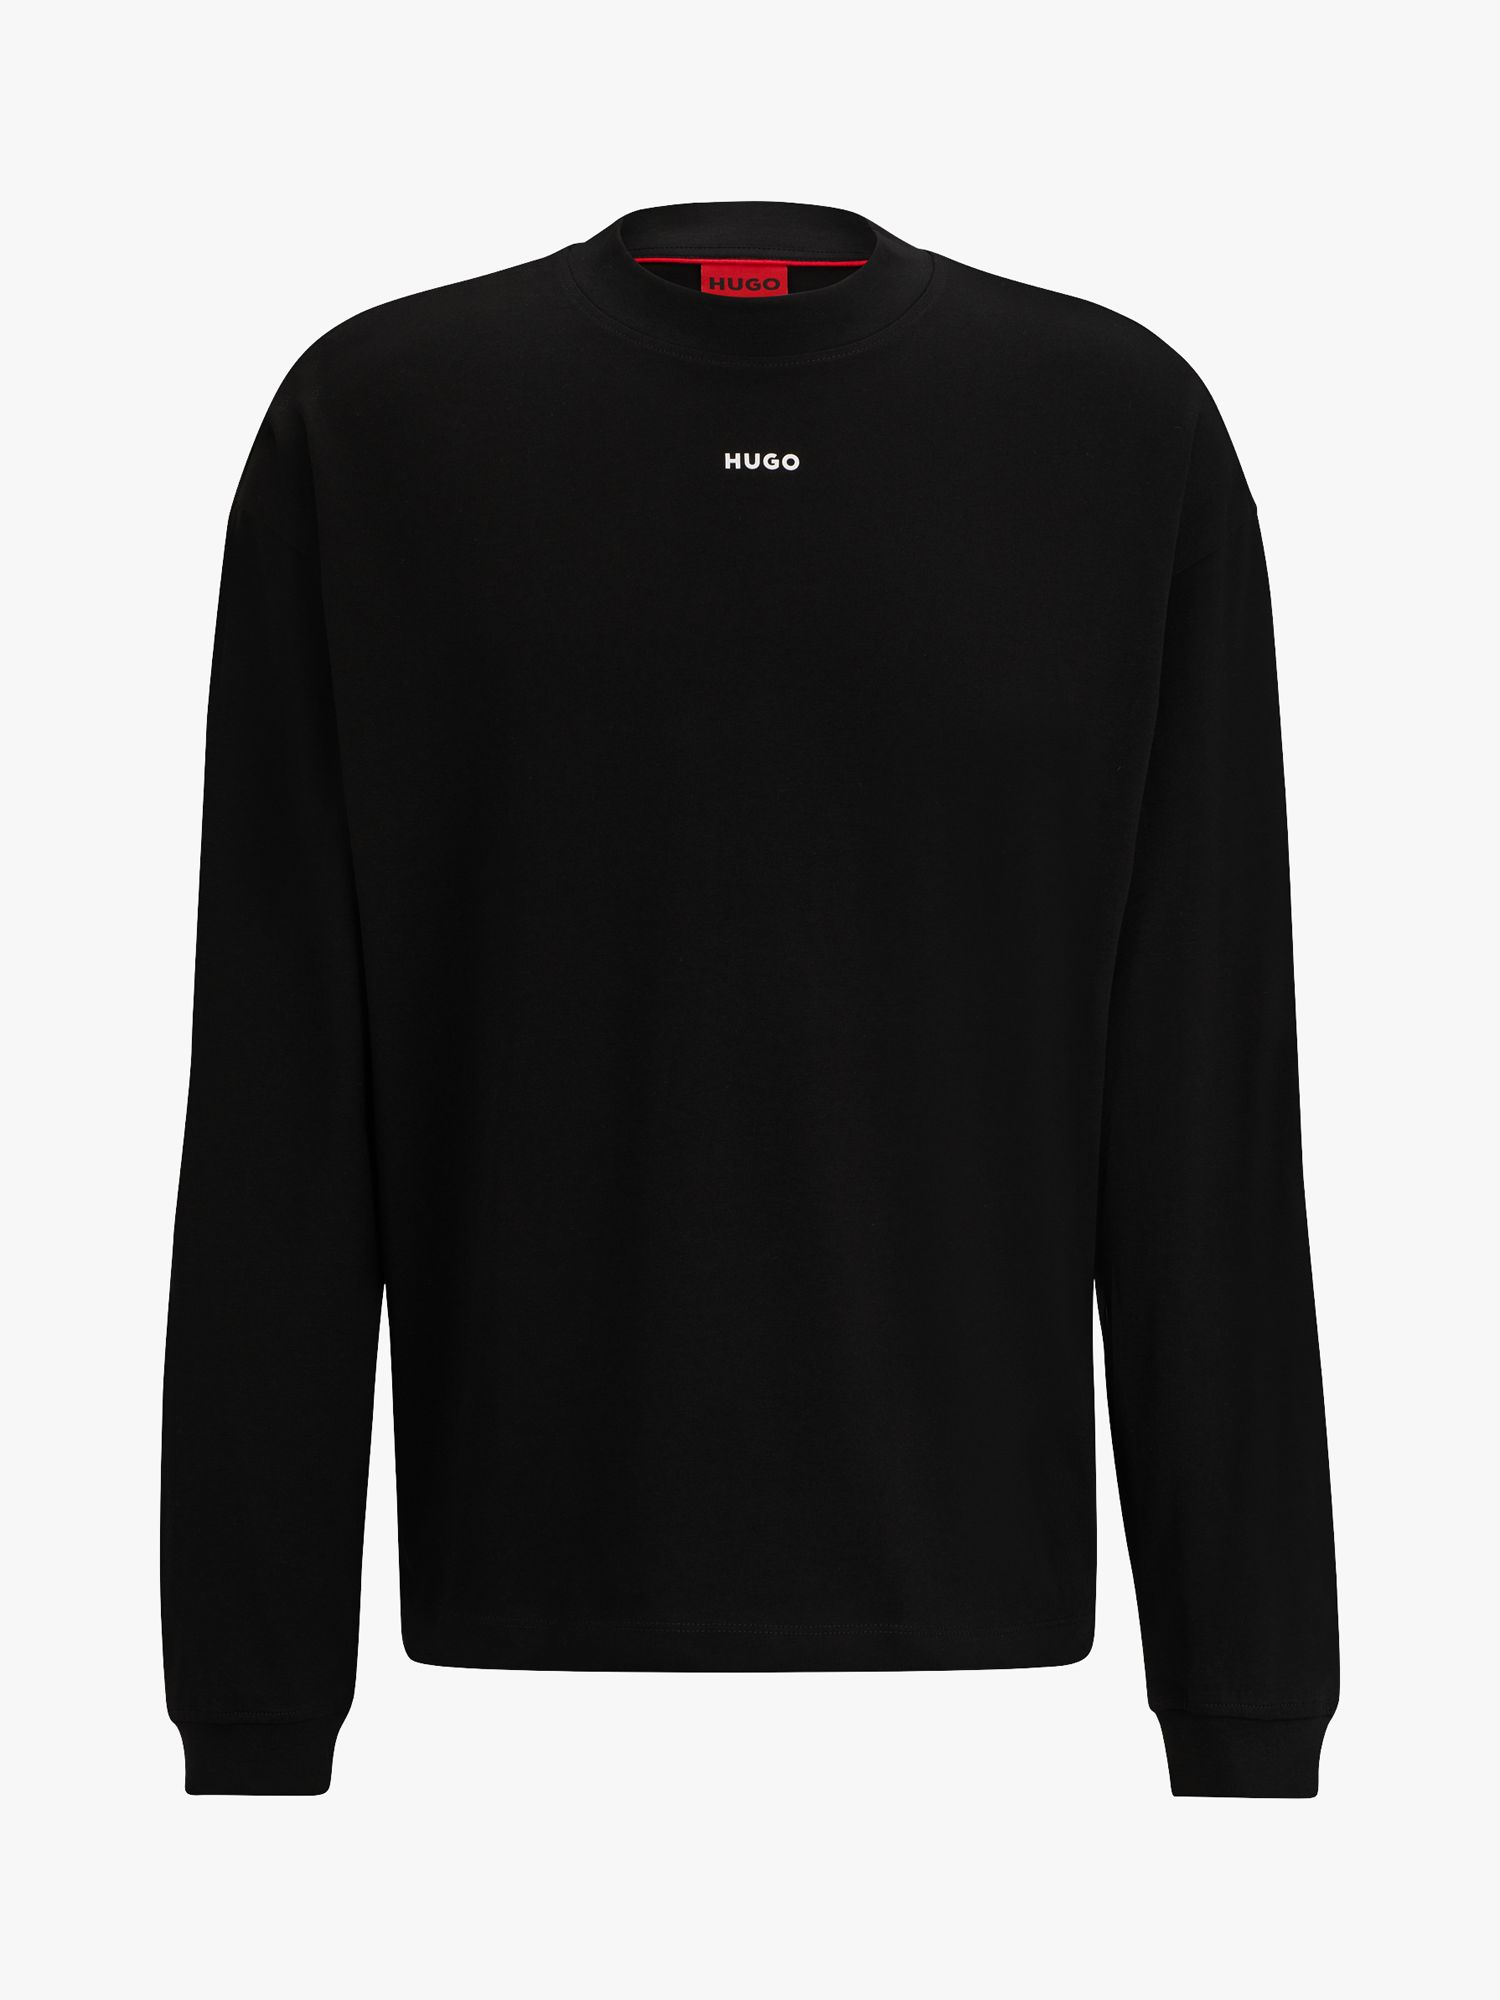 HUGO Daposo Crew Neck Logo Sweatshirt, Black at John Lewis & Partners